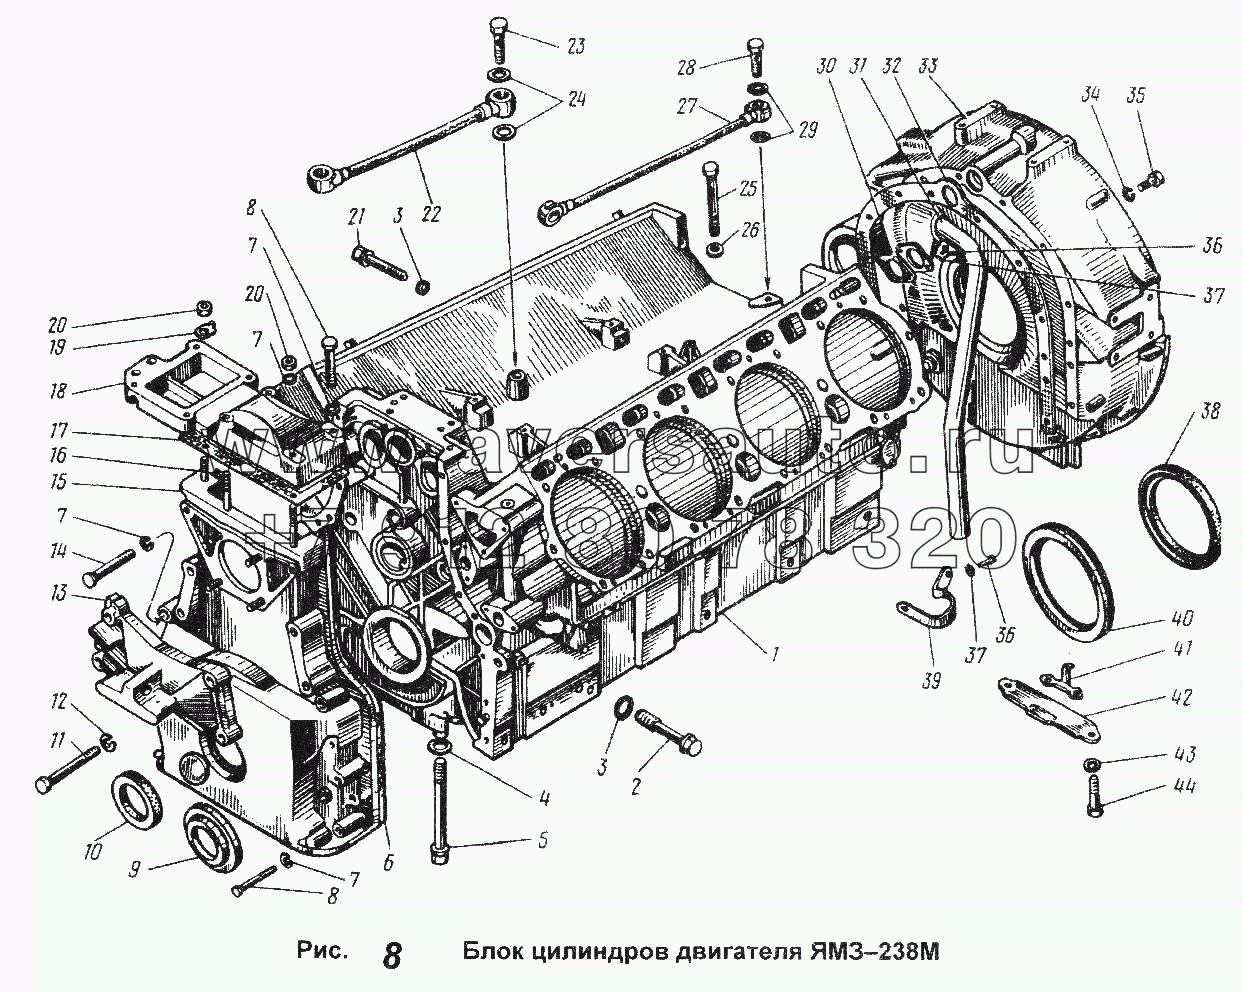 Блок цилиндров двигателя ЯМЗ-238М